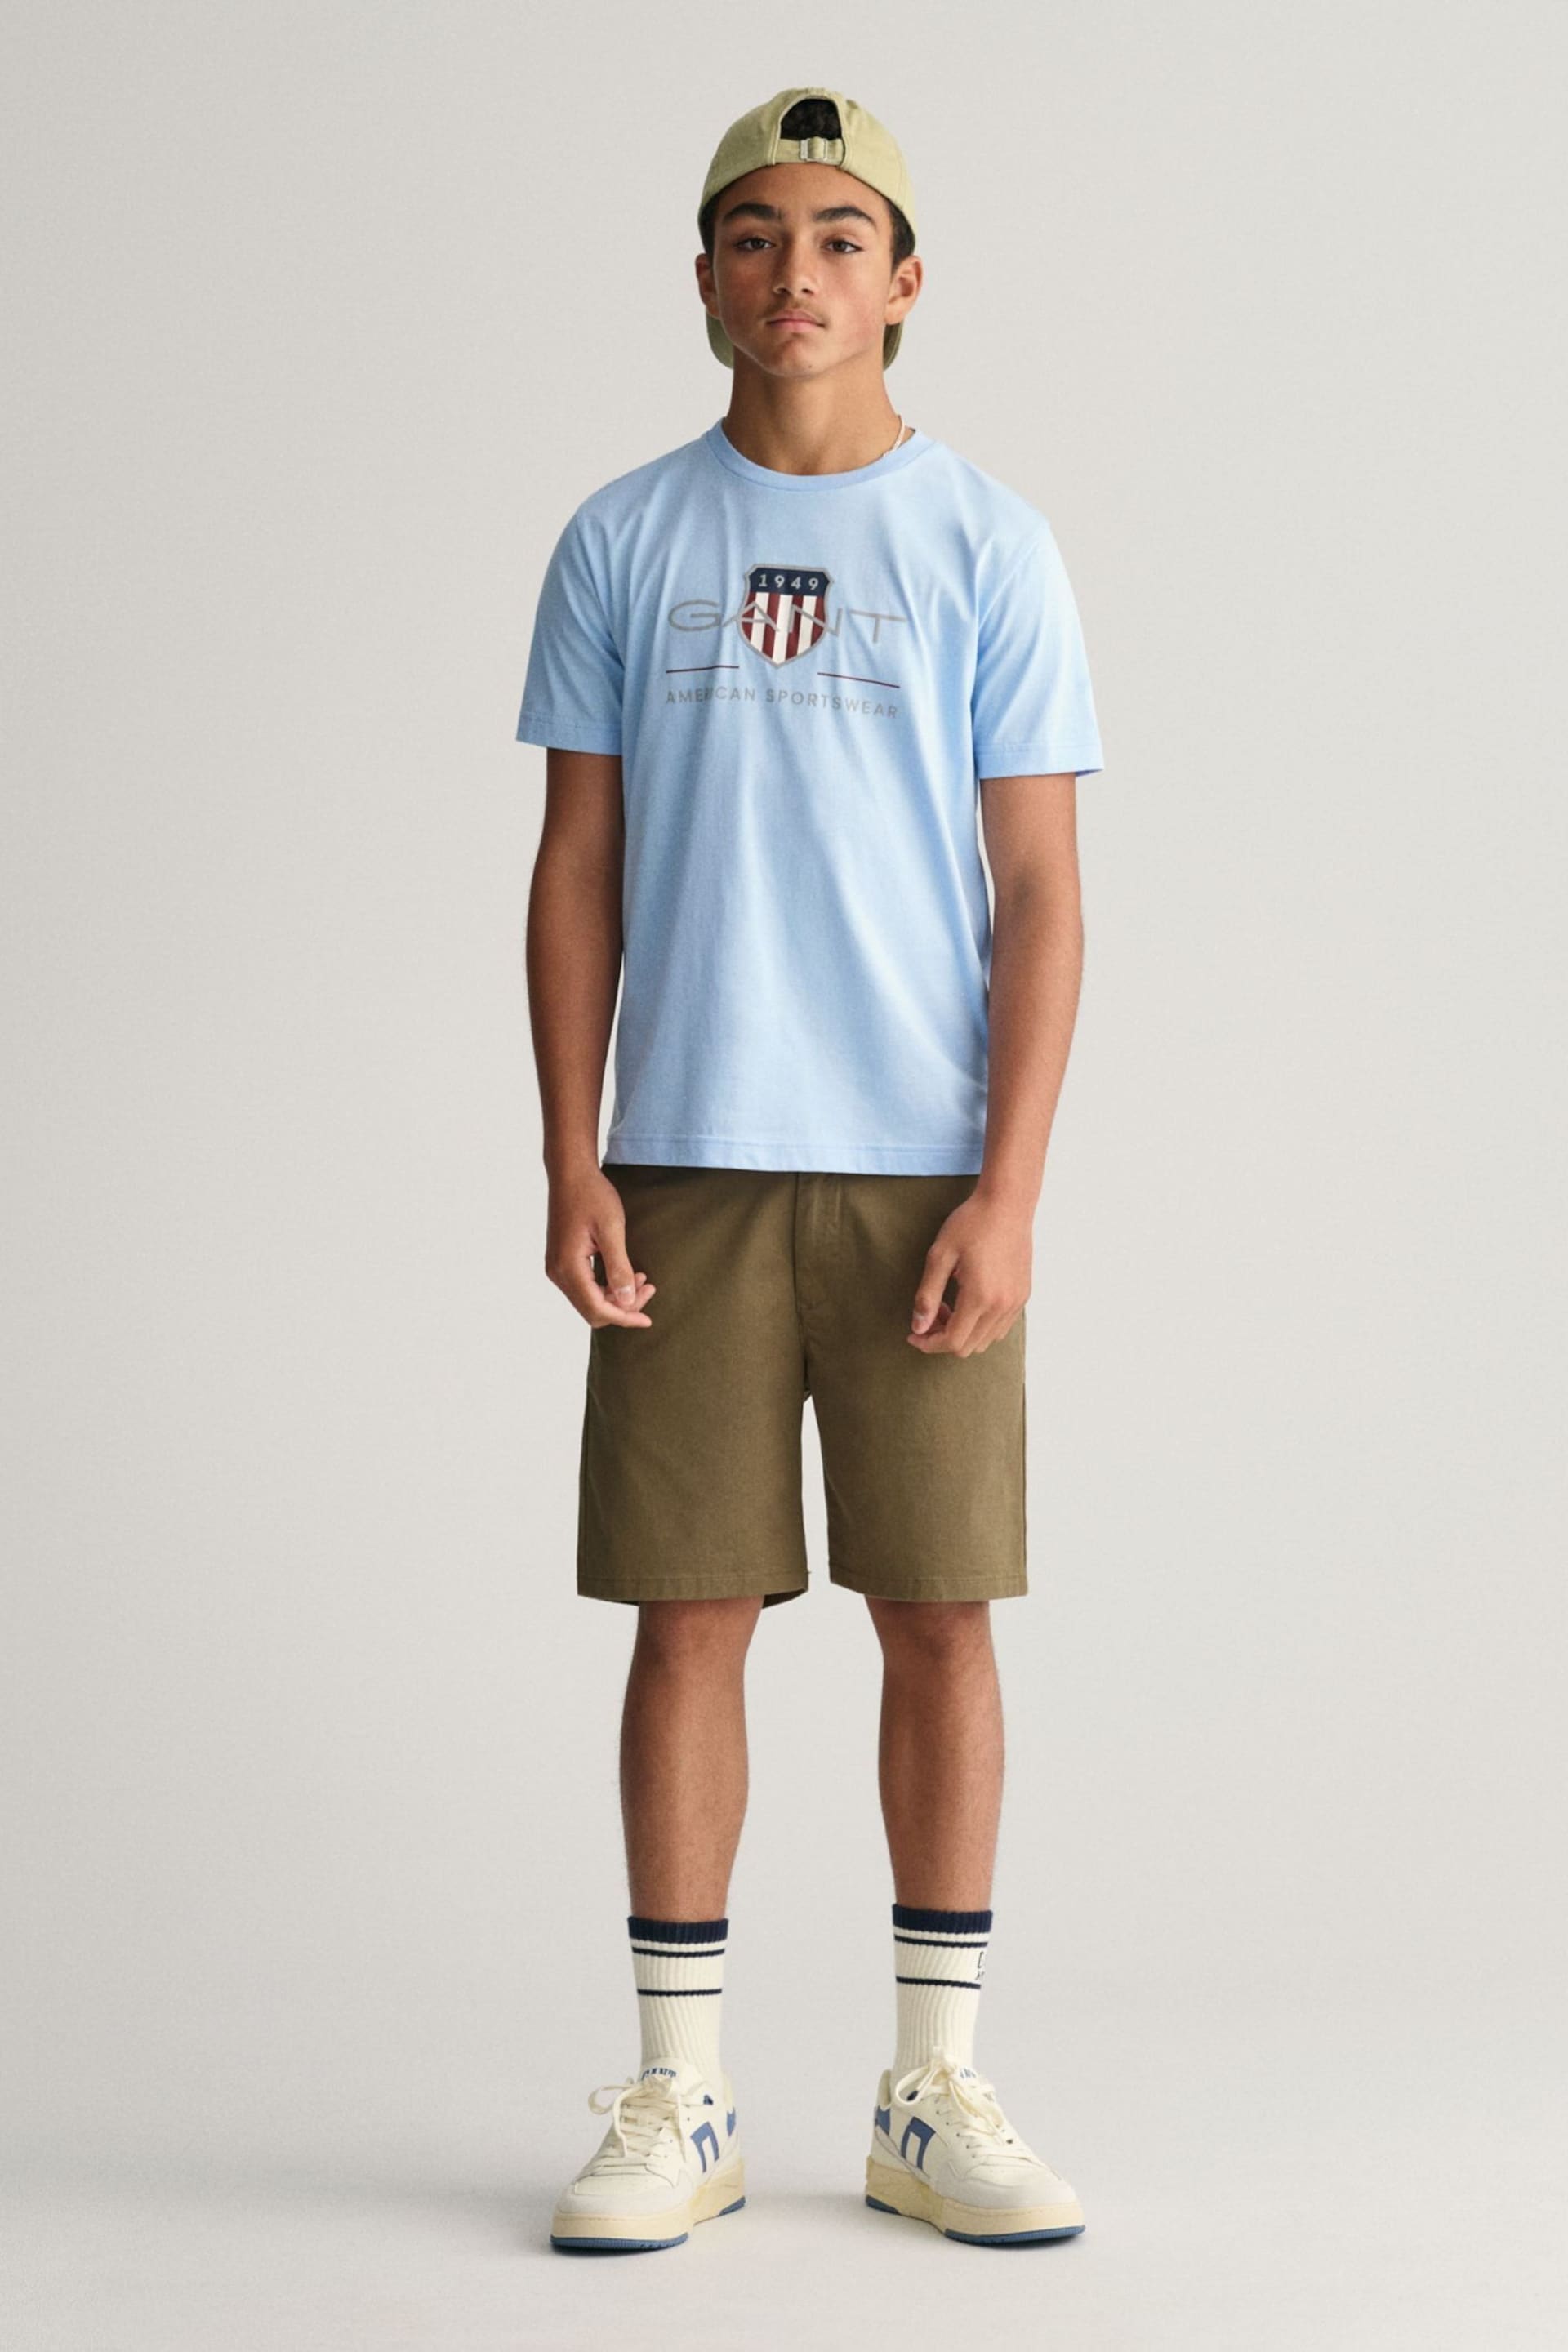 GANT Blue Archive Shield Teens T-Shirt - Image 3 of 5